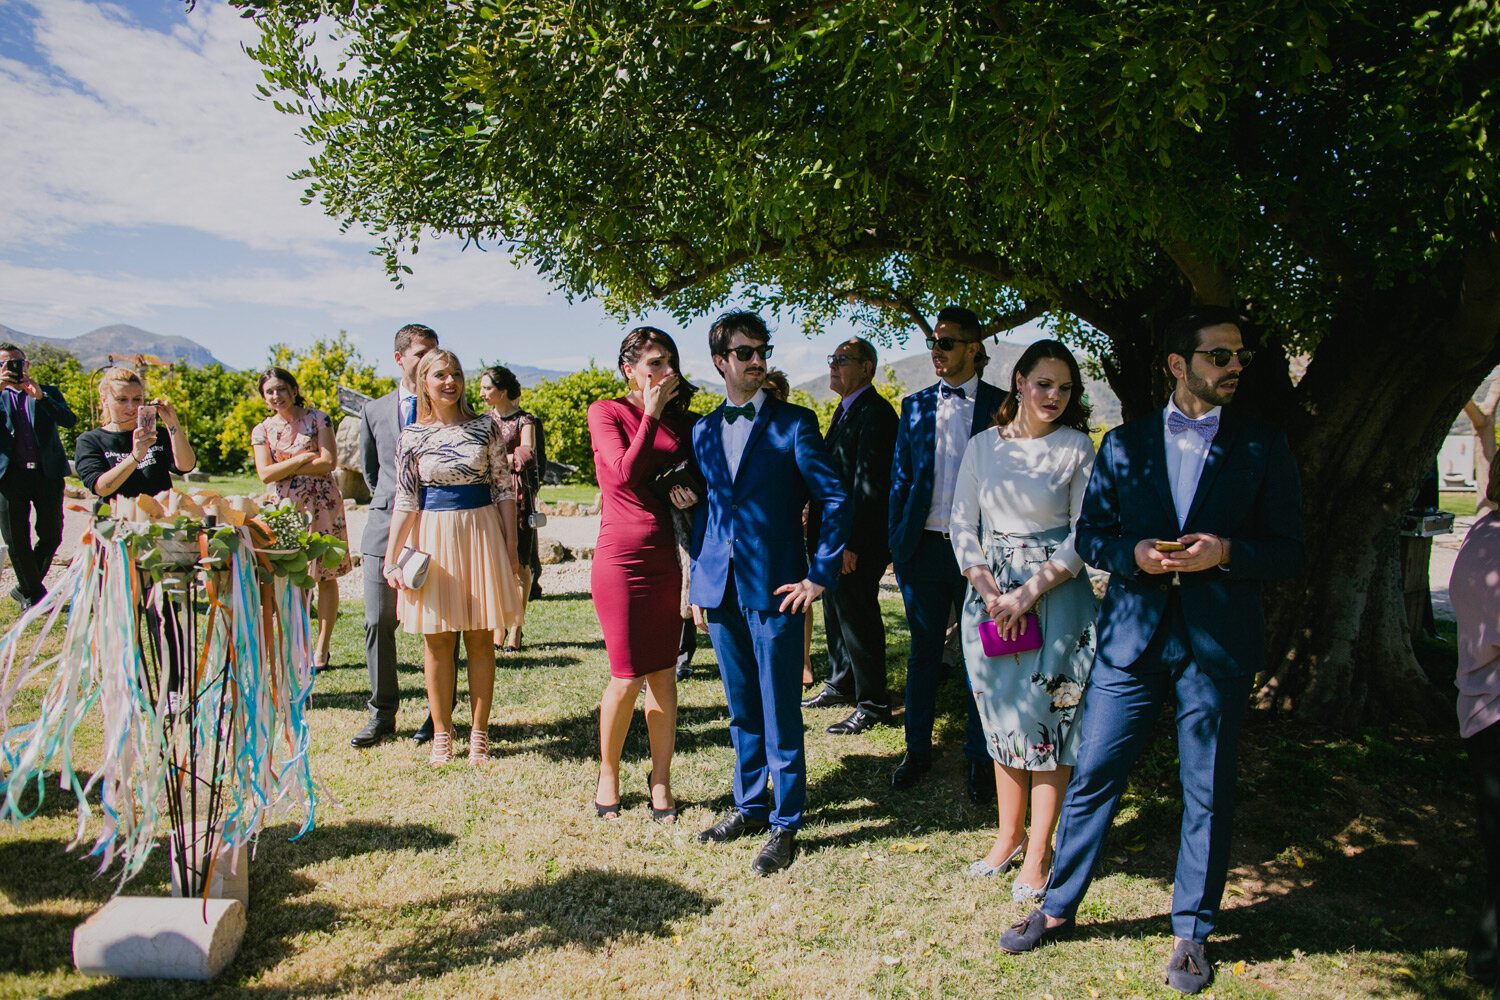 072-vilayvidal-fotografia-bodas-gandia-valencia-alicante-boda-Dolores-Jorge-Casa-Benigalip.jpg